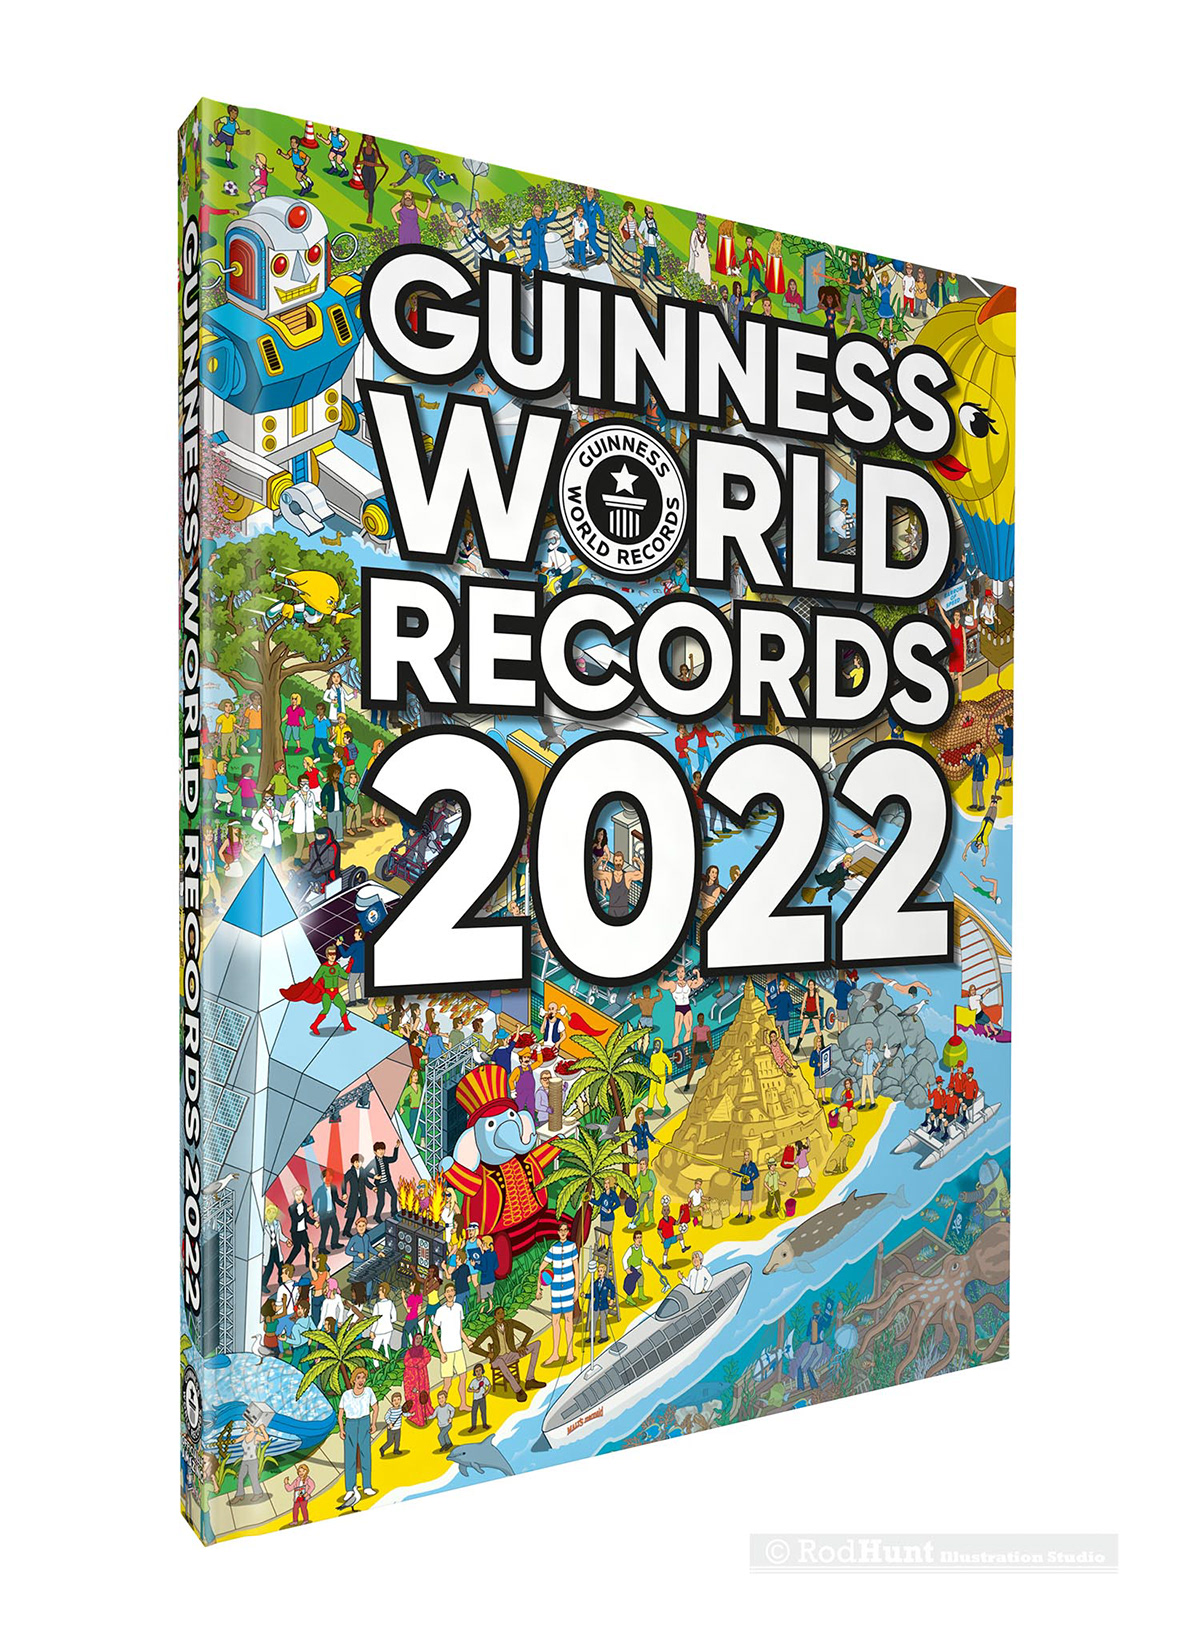 Guinness World Records 2022 Book Cover Illustration on Behance